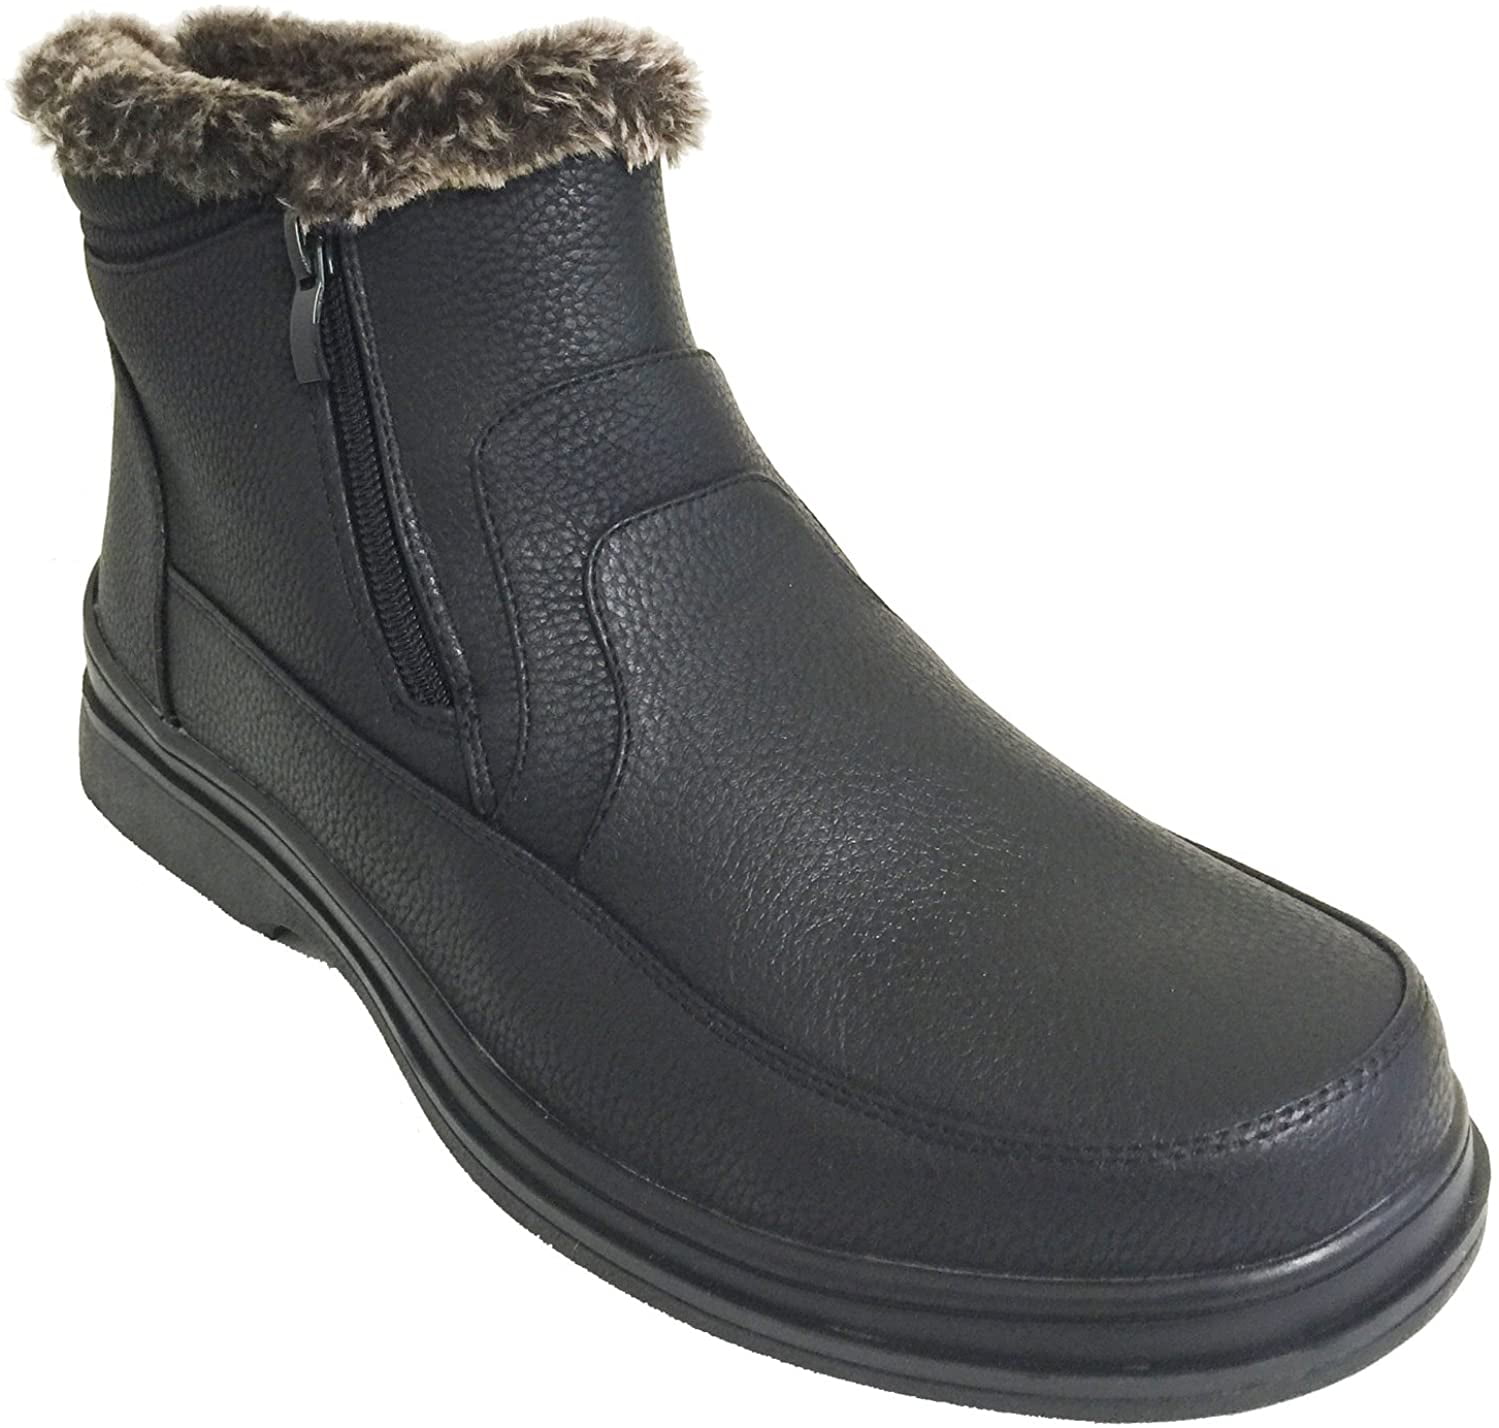 Men's Snow Outdoor Ankle Boots Winter Warm Snow Boots Faux Fur Lining Shoes Plus